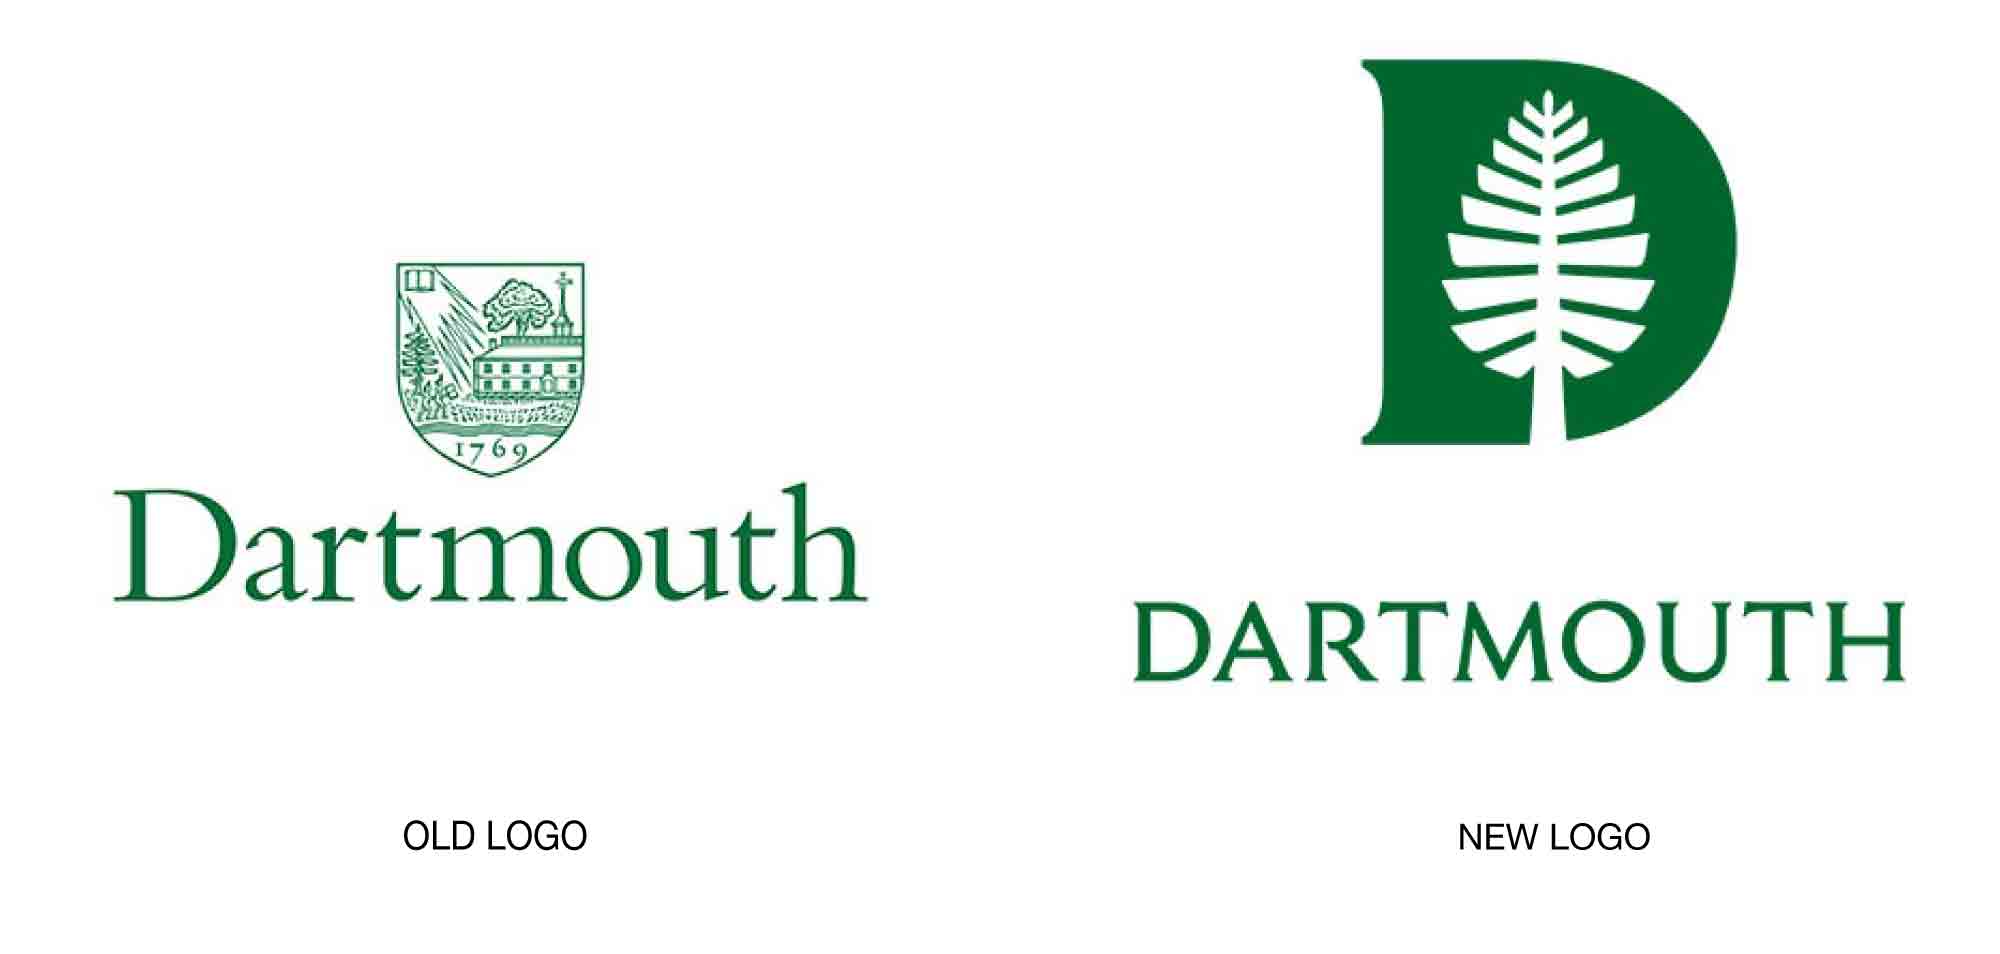 Dartmouth Logo - Dartmouth Builds on New Pillars | Articles | LogoLounge